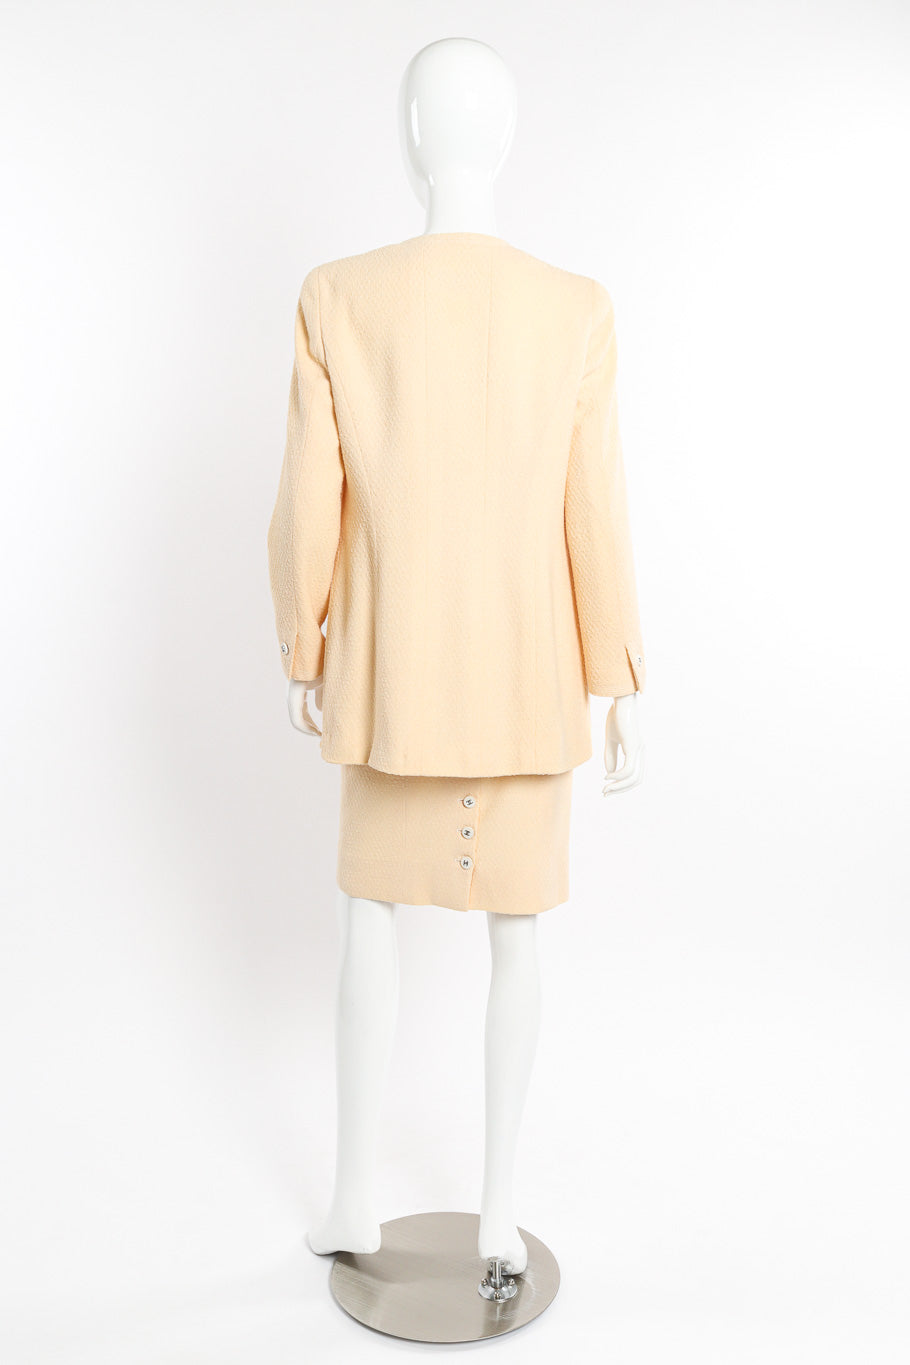 Chanel Knit Bouclé Jacket and Skirt Set back on mannequin @recessla